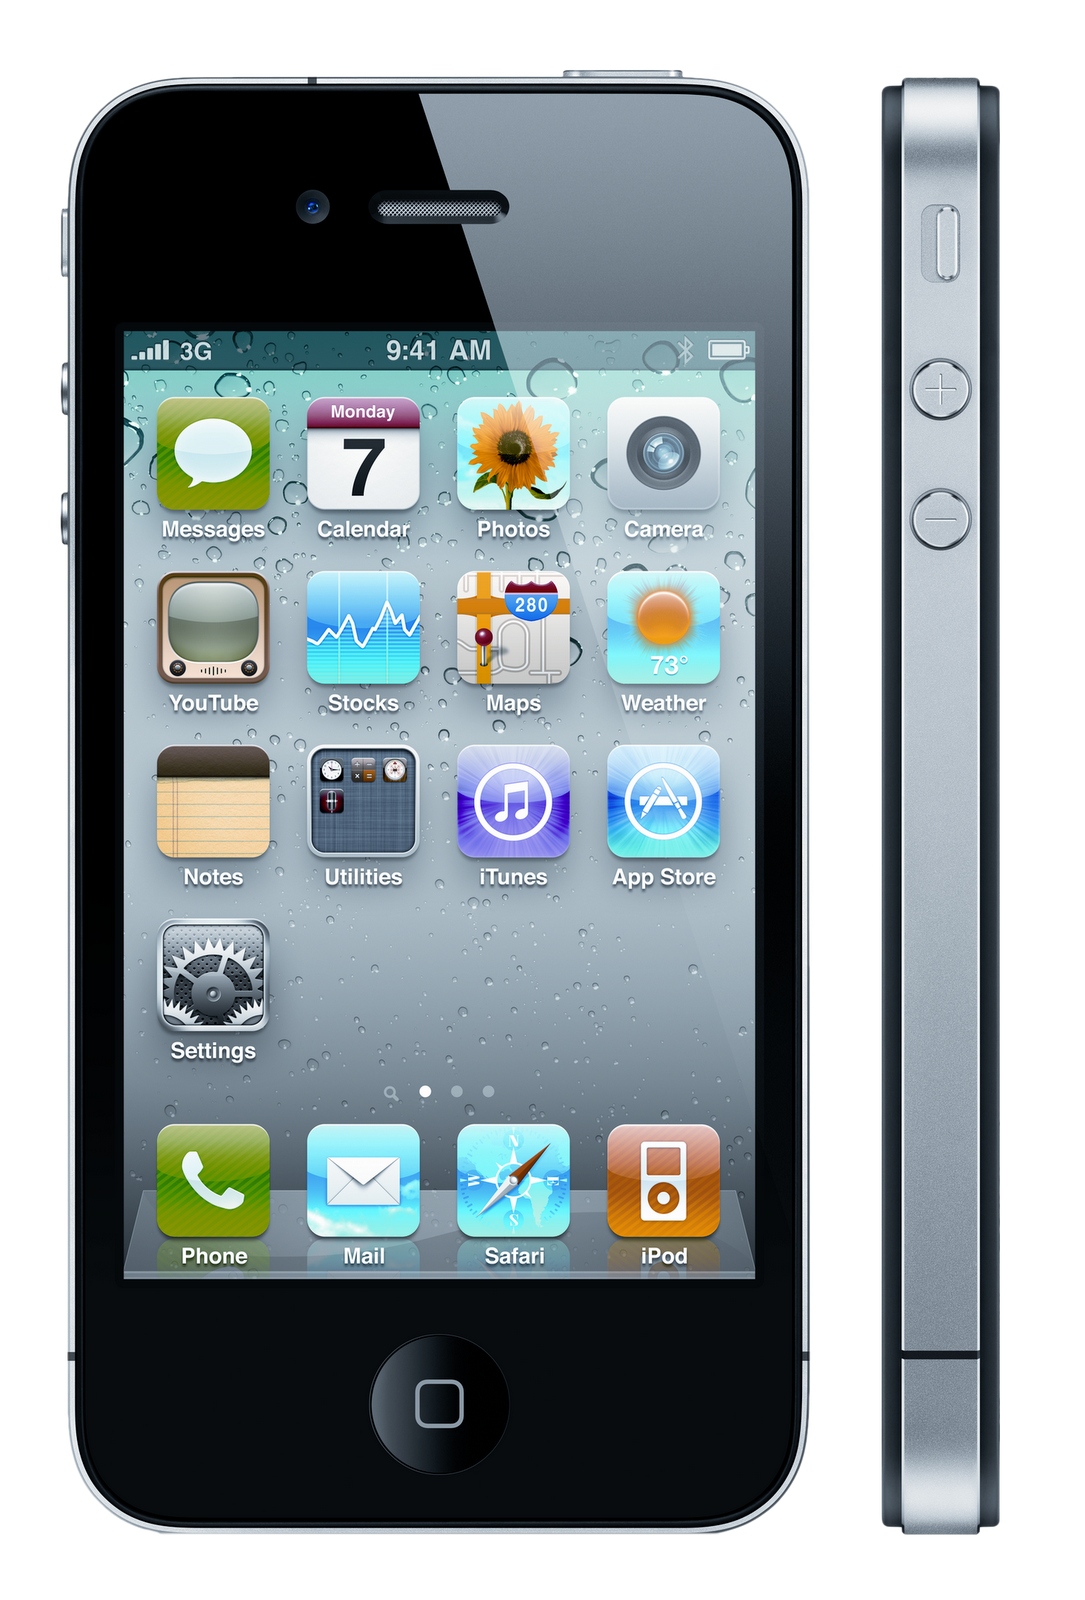 Apple iPhone 4 Mobile Smartphone 8GB 16GB 32GB Sim Free Unlocked Good Condition | eBay